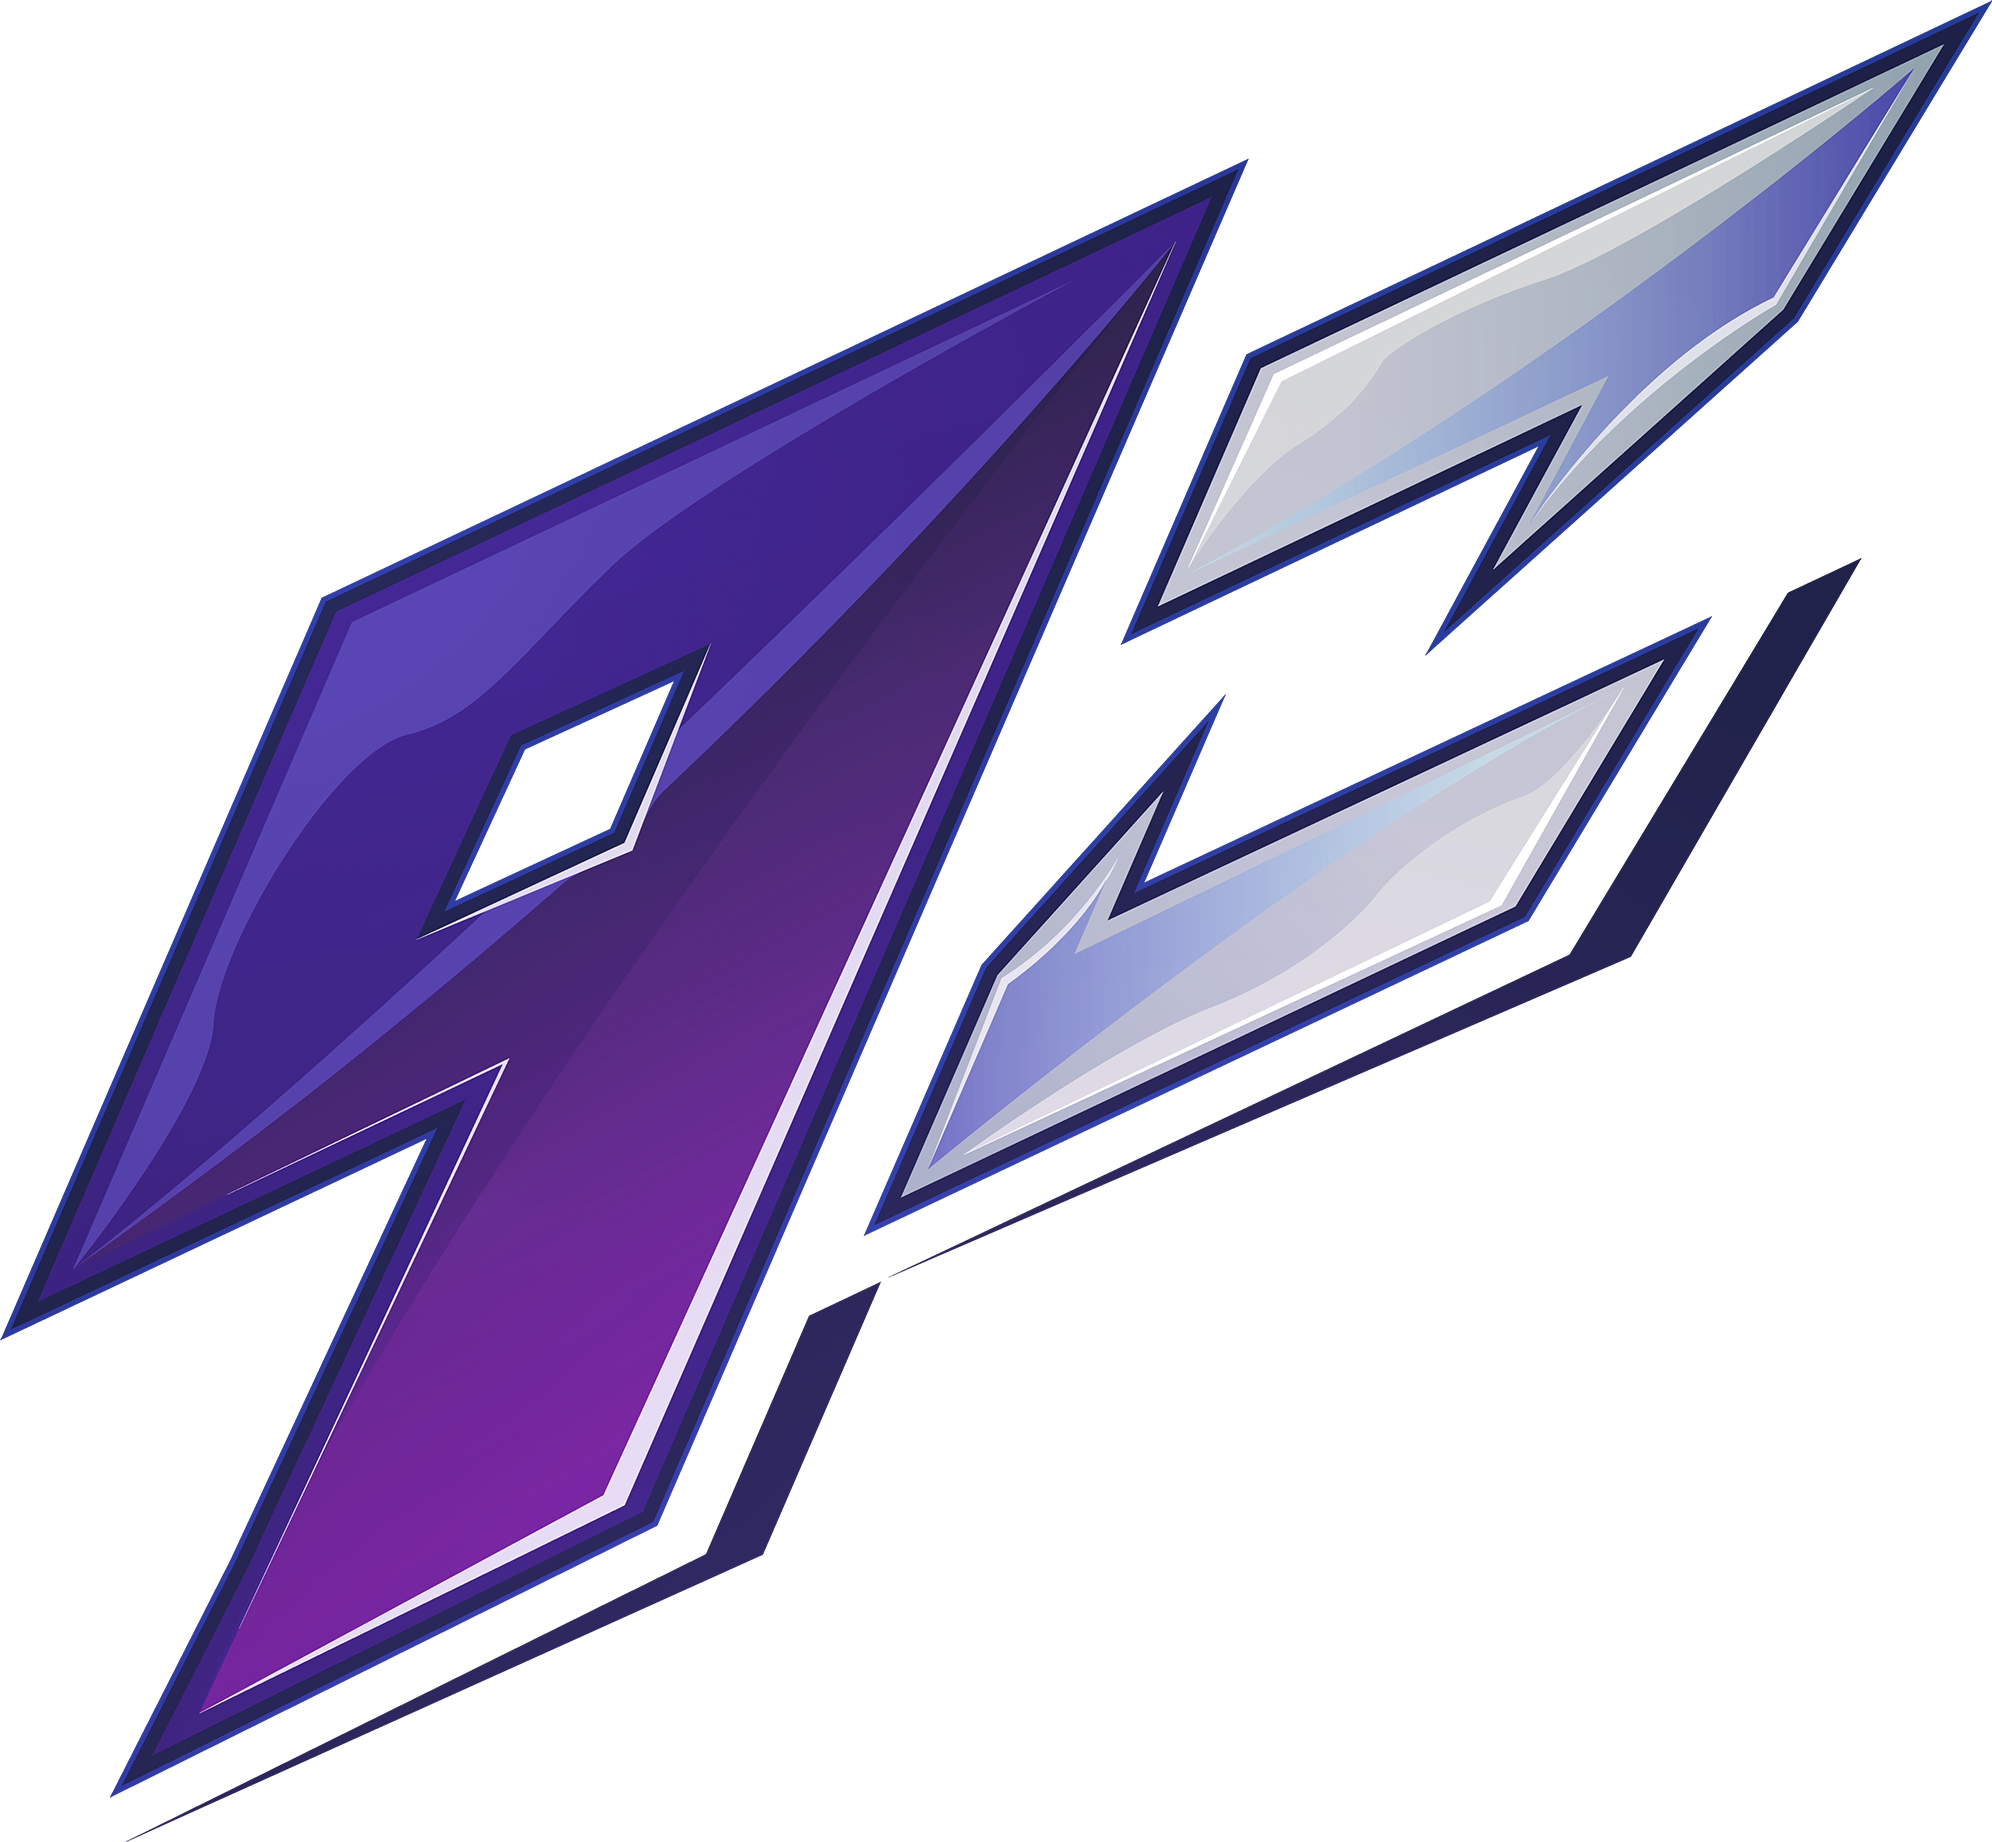 9z Team's logo